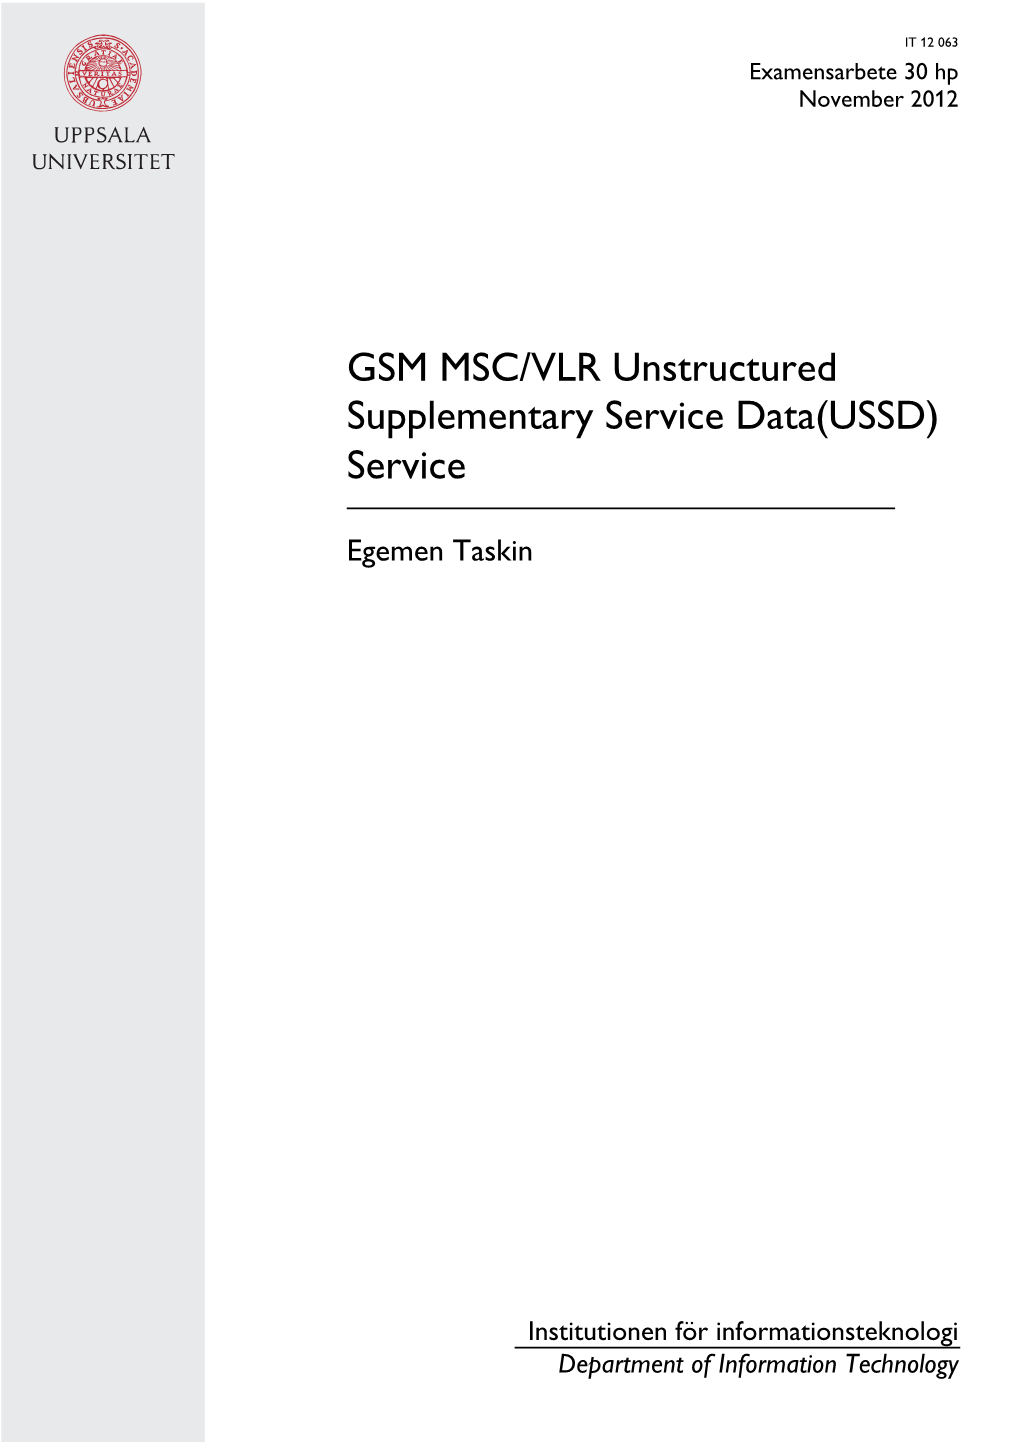 GSM MSC/VLR Unstructured Supplementary Service Data(USSD) Service